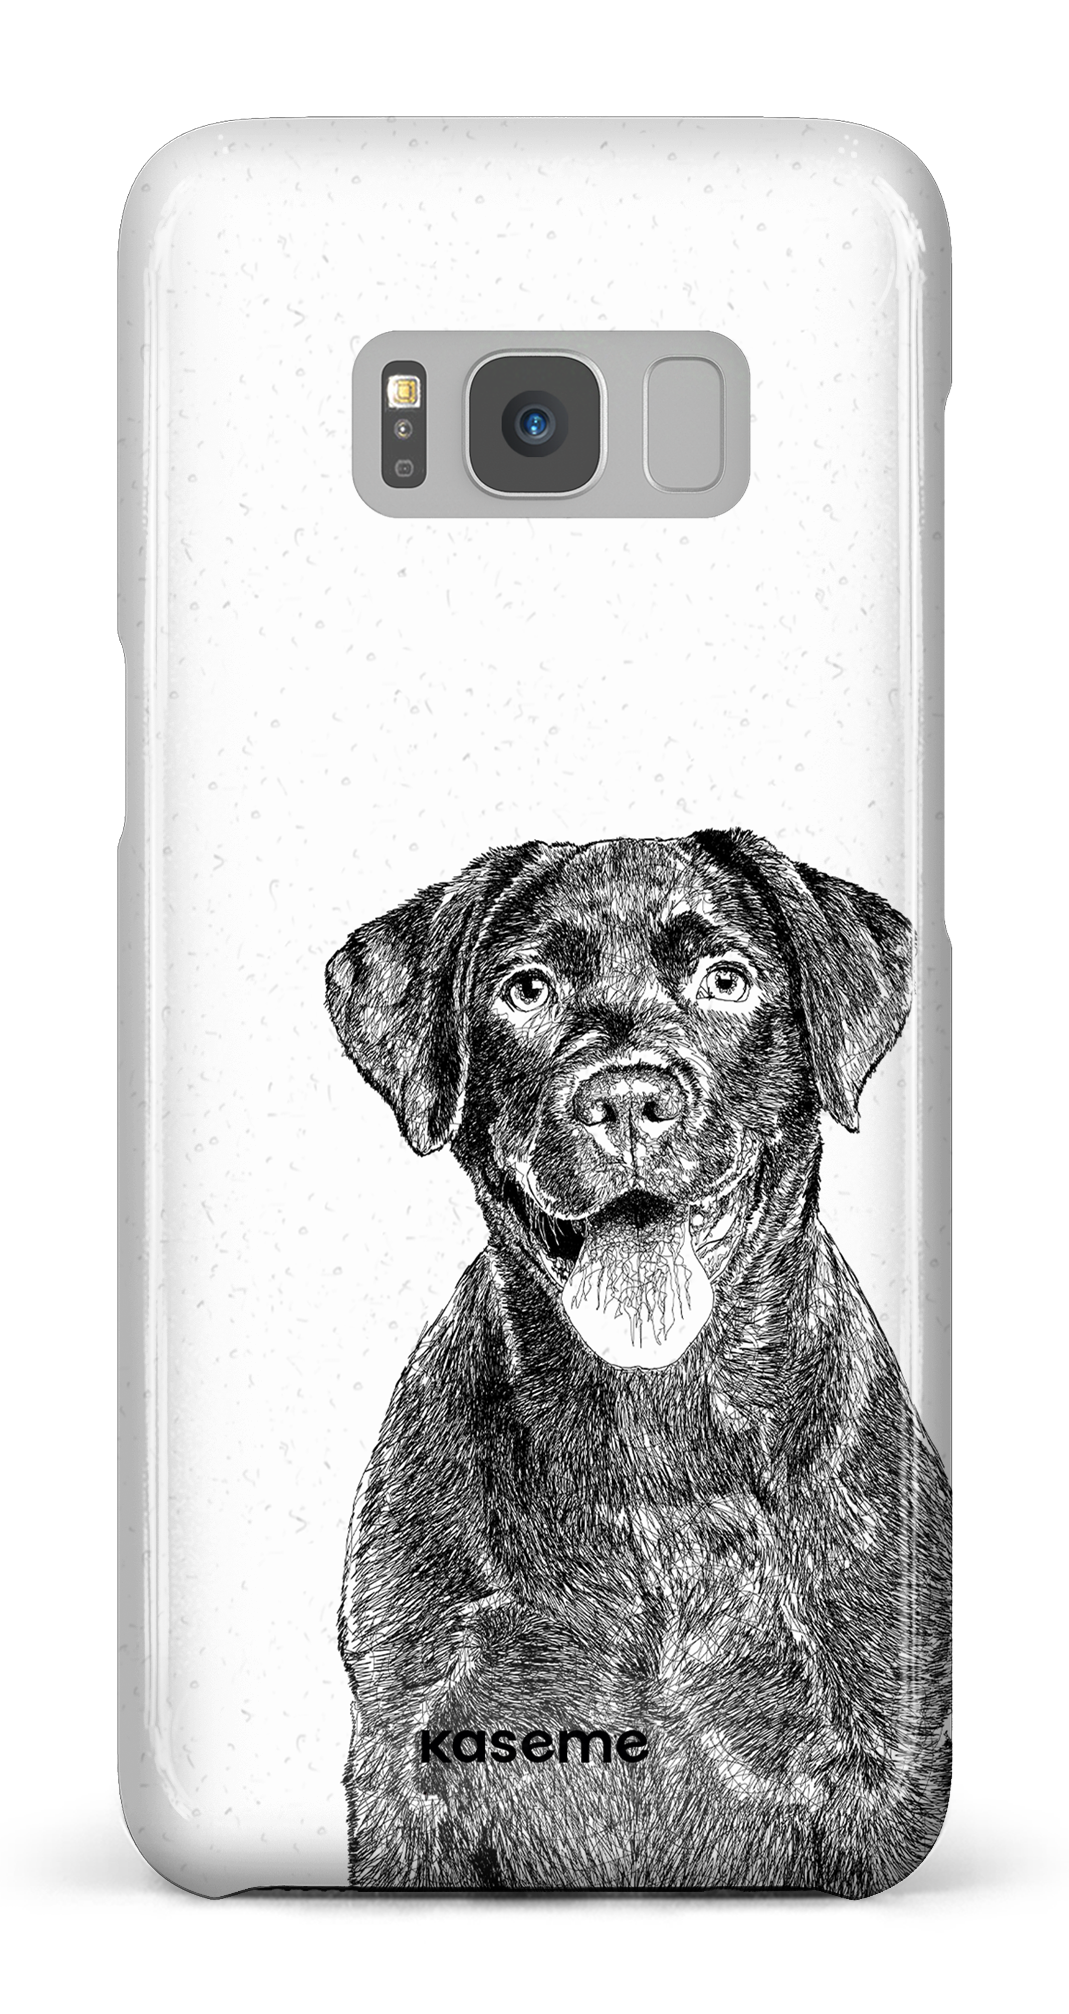 Labrador Retriever - Galaxy S8